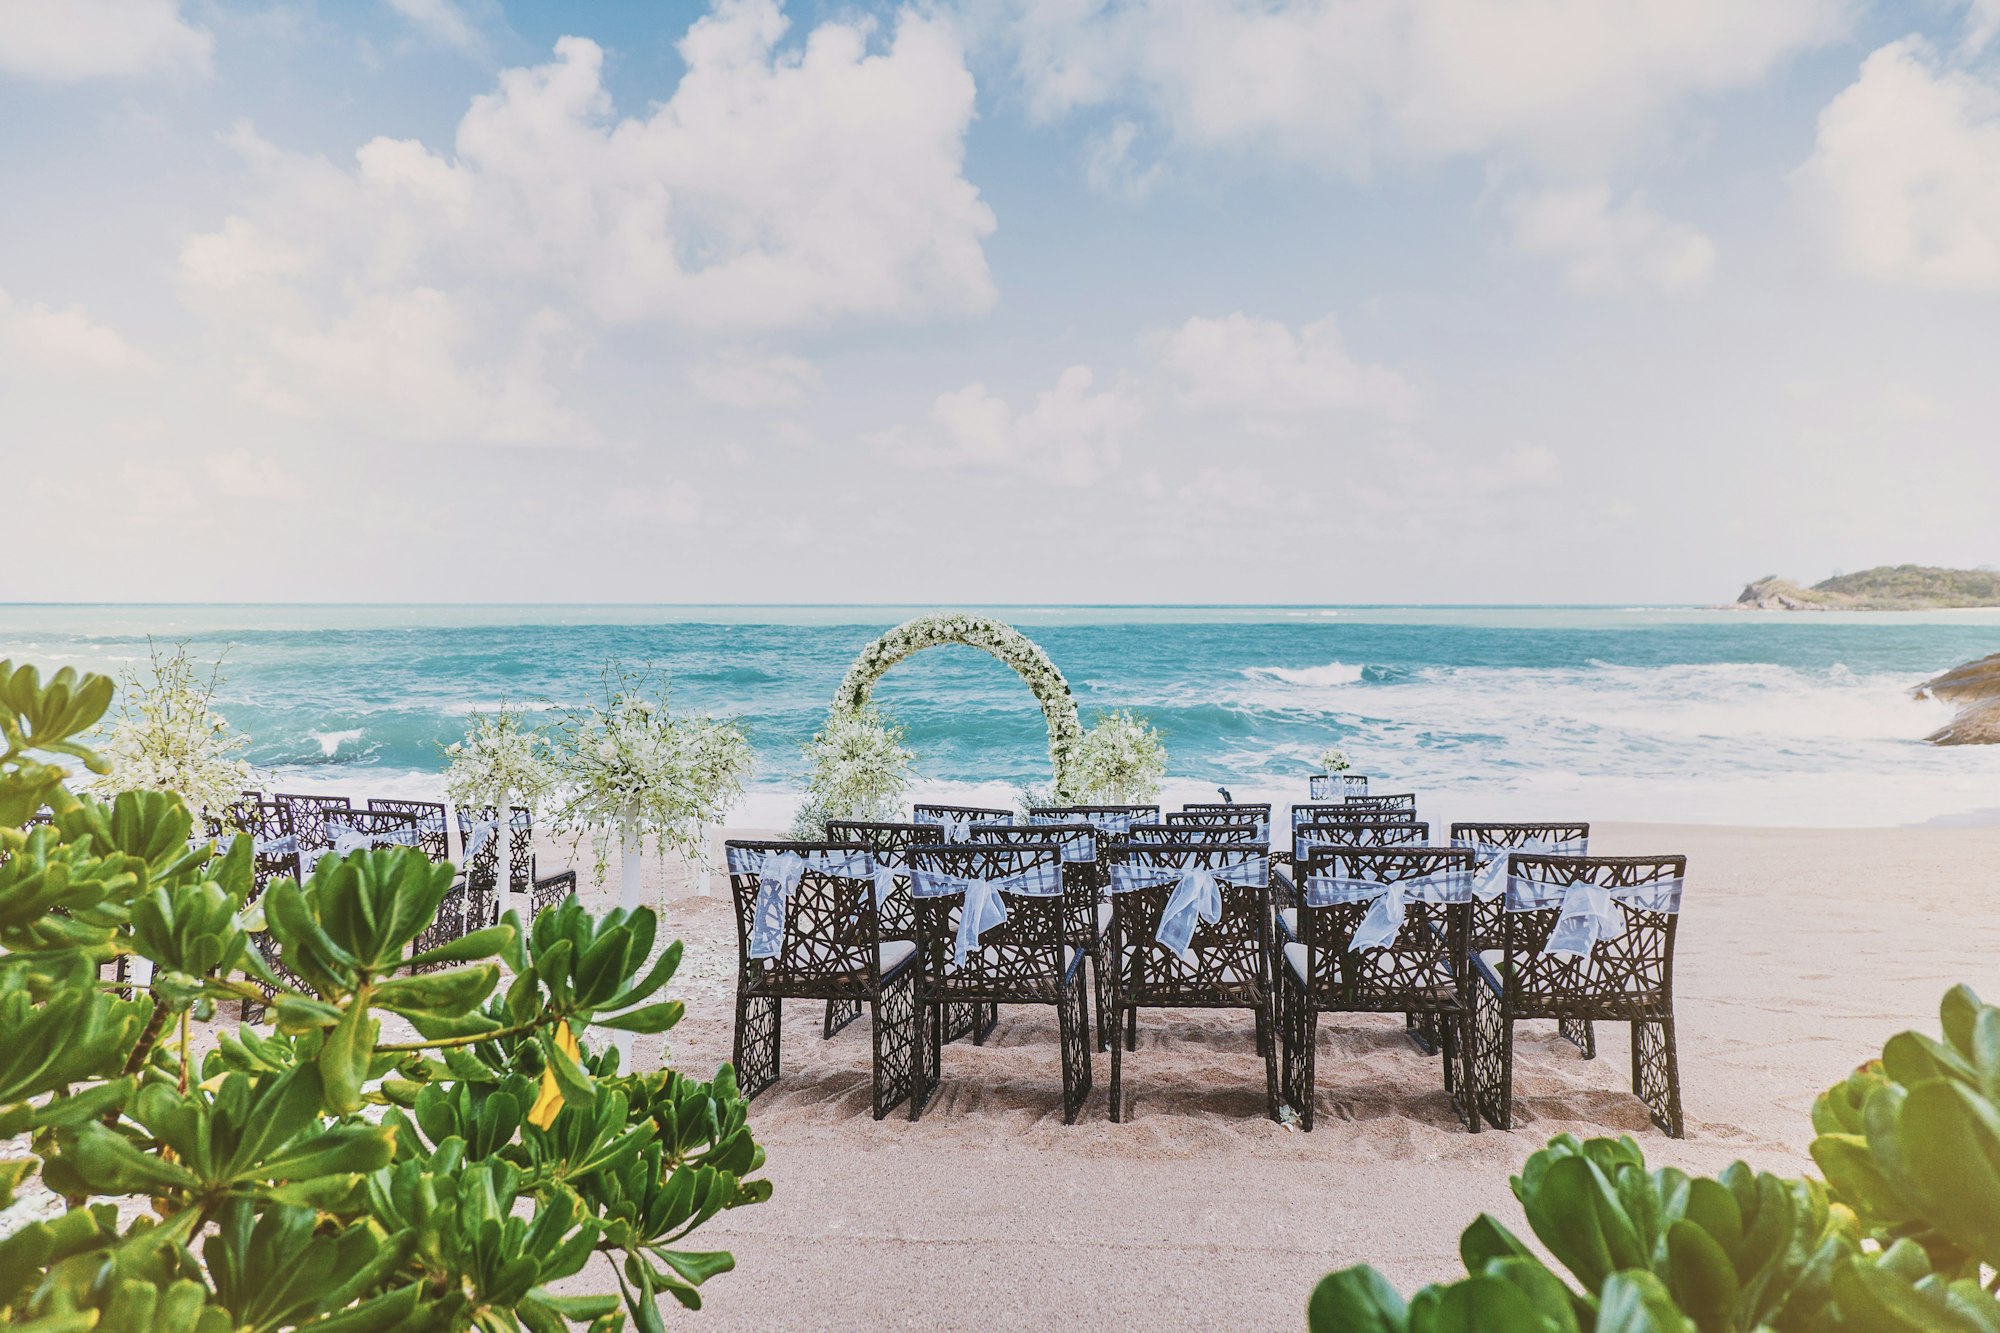 Wedding ceremony venue setting on the beach